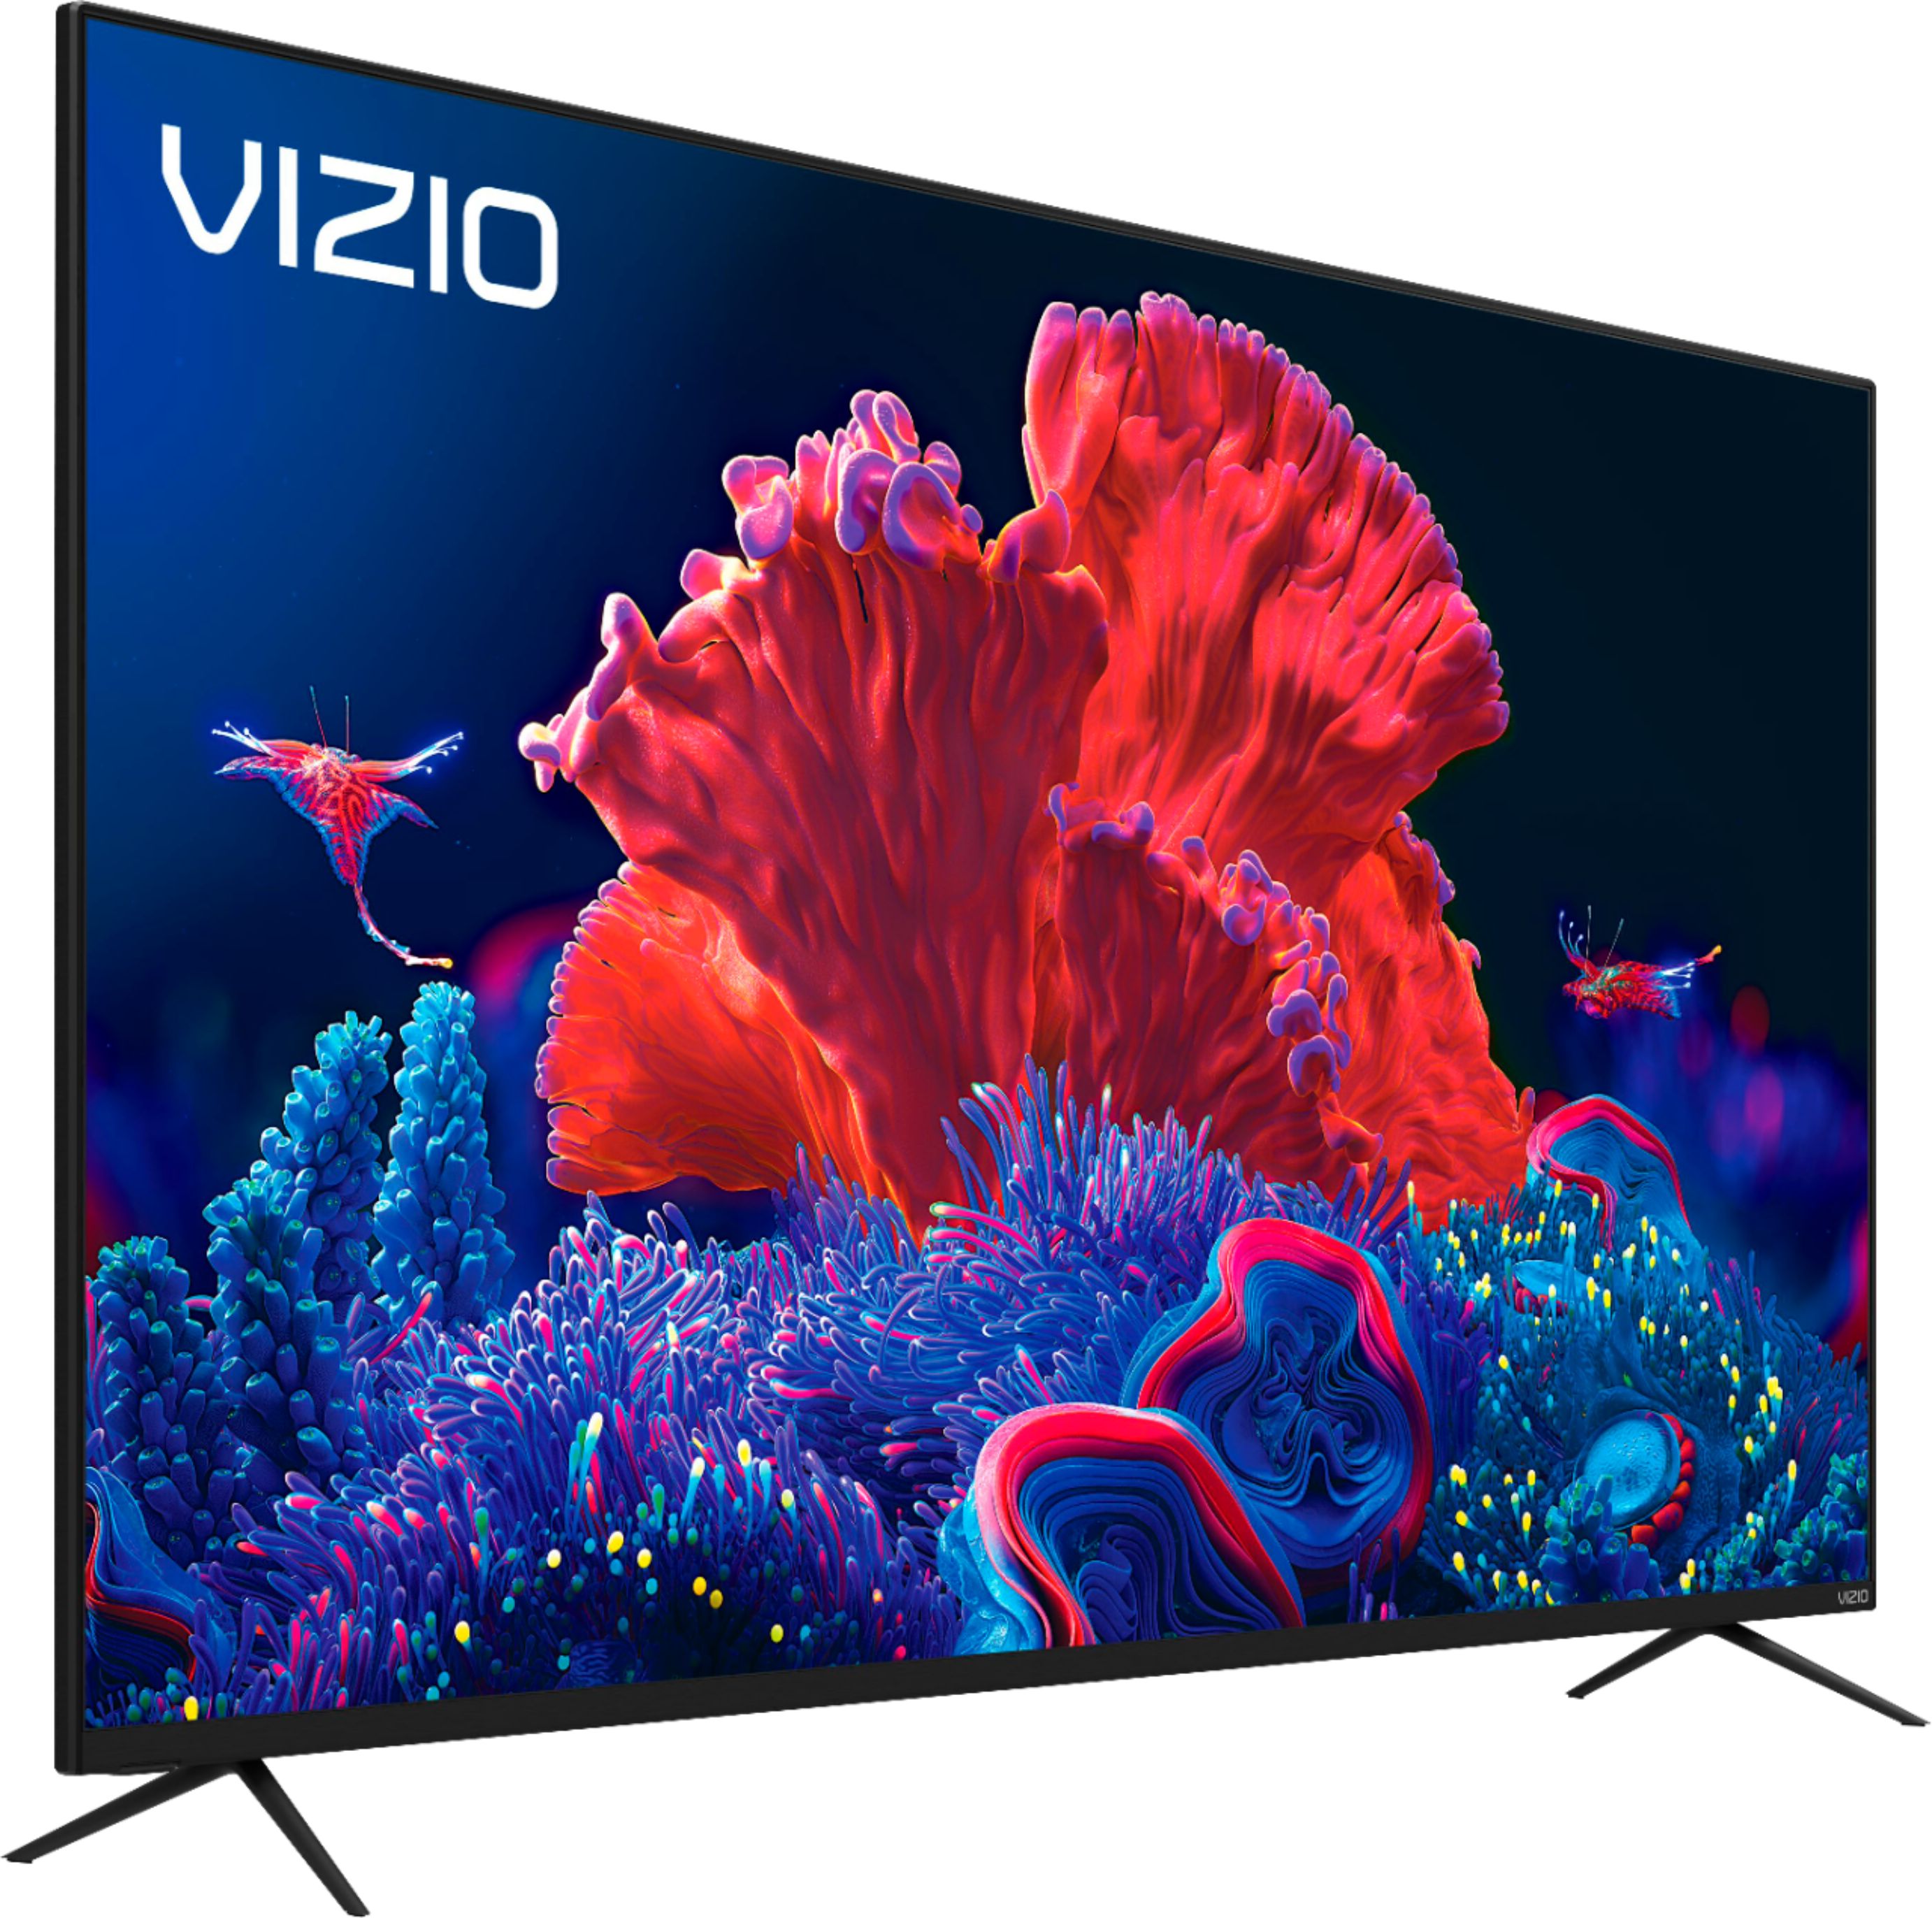 Angle View: VIZIO - 55" Class M-Series Quantum Series LED 4K UHD SmartCast TV